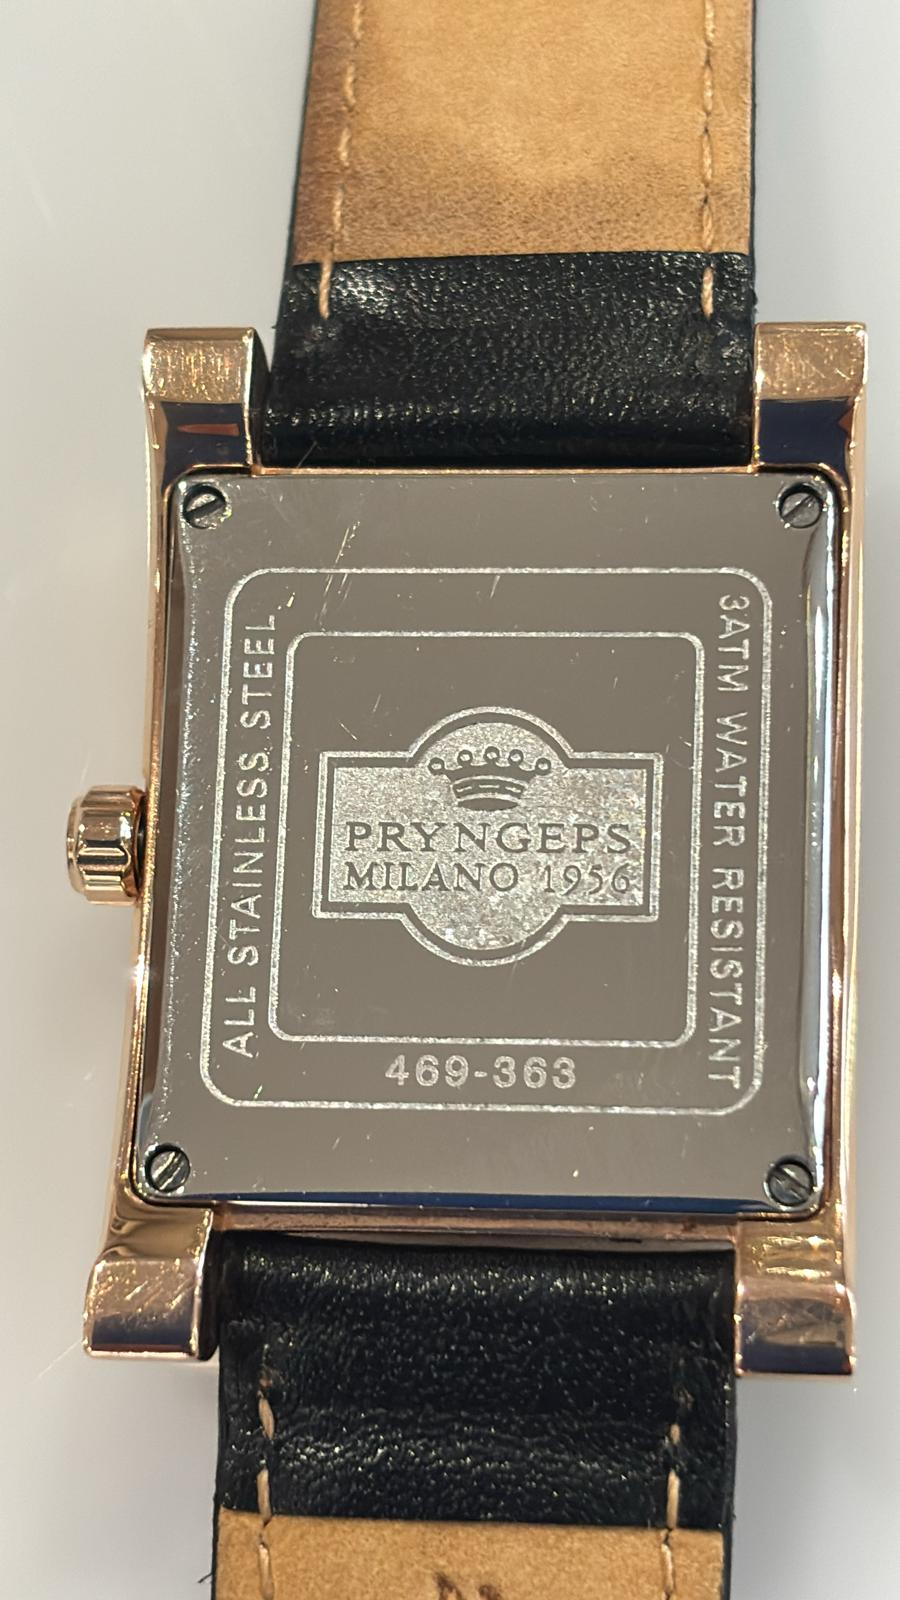 Italian Pryngeps Milano 469-363 Rose Gold Watch - Image 4 of 5